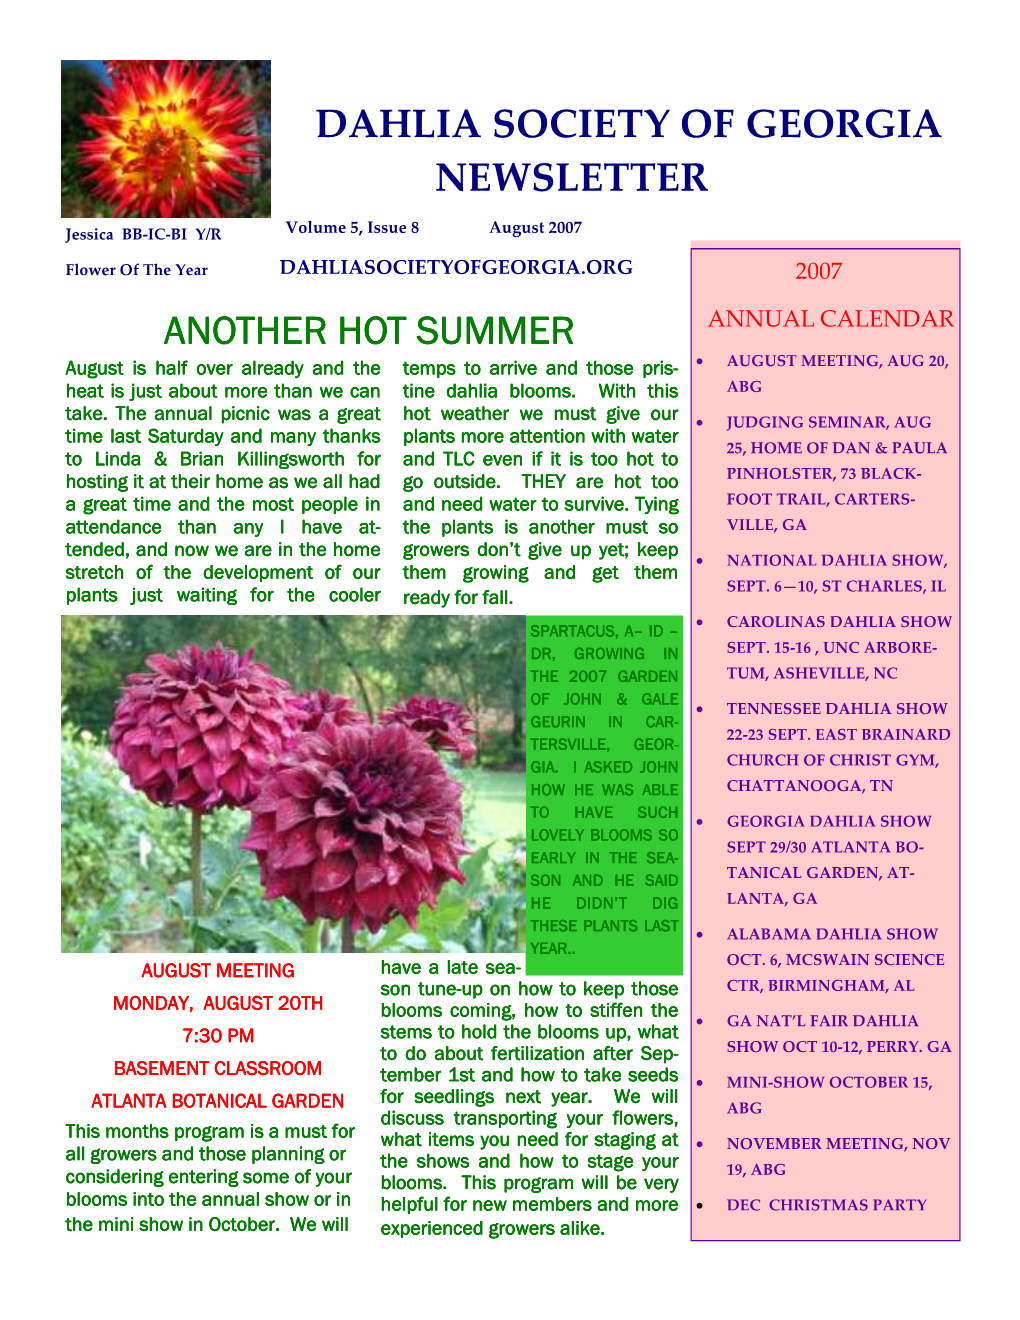 August 2007 Newsletter